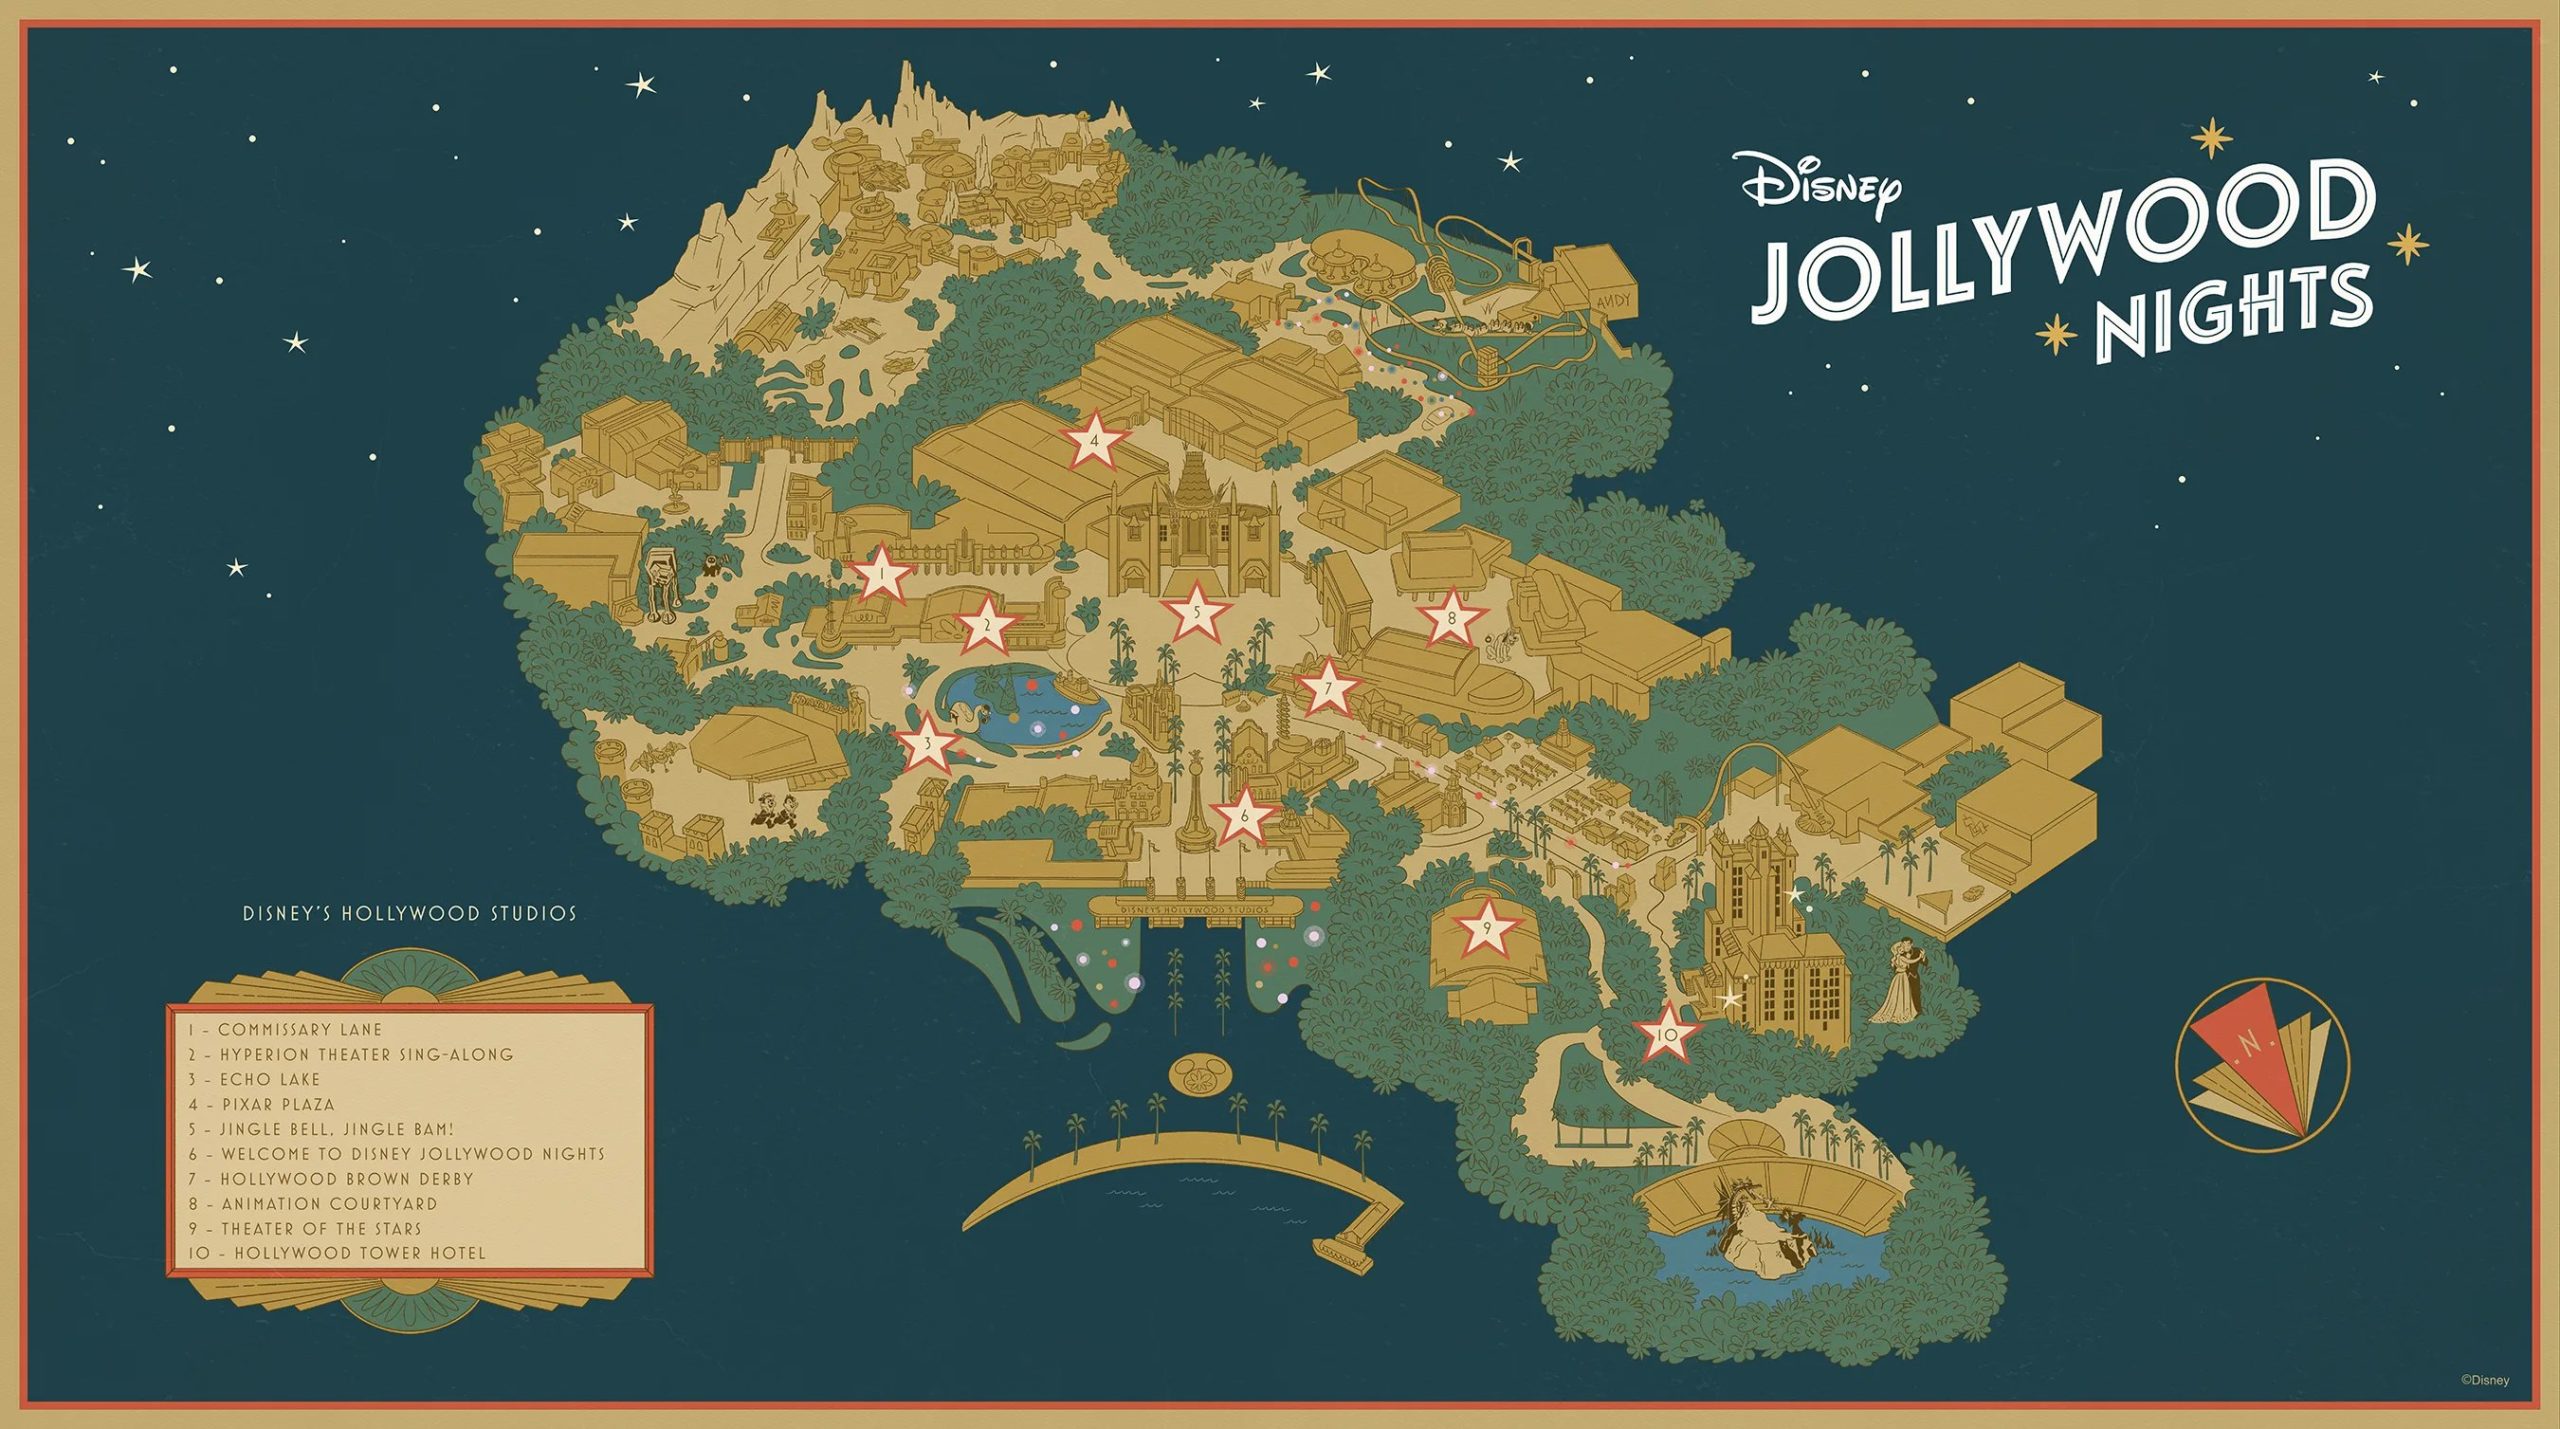 Disney Jollywood Nights tickets